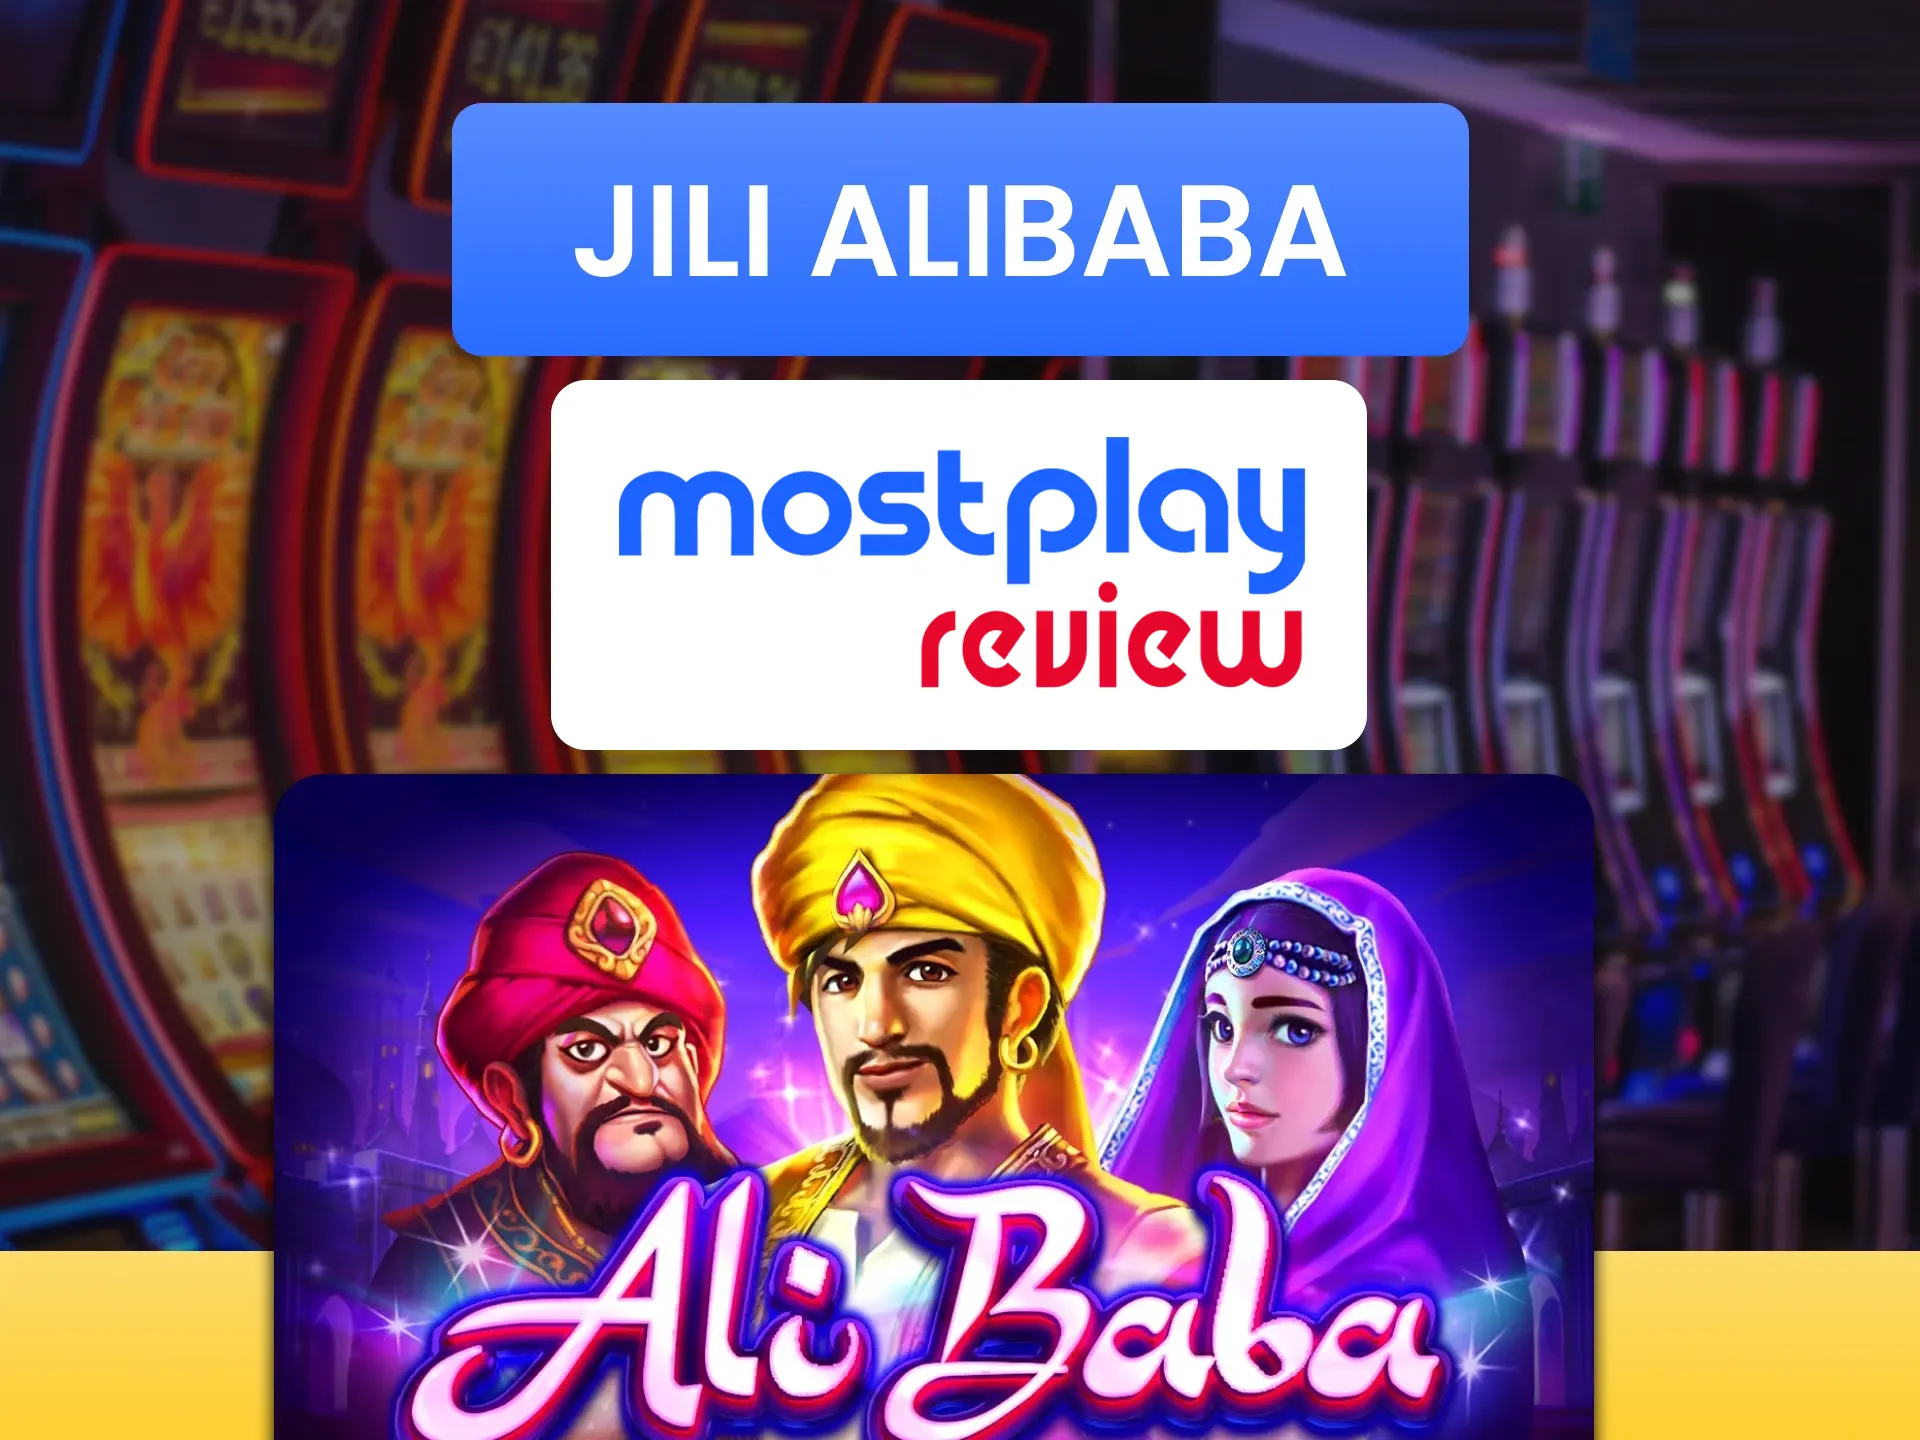 Win money by playing the Jili Alibaba slot at the Mostplay casino.